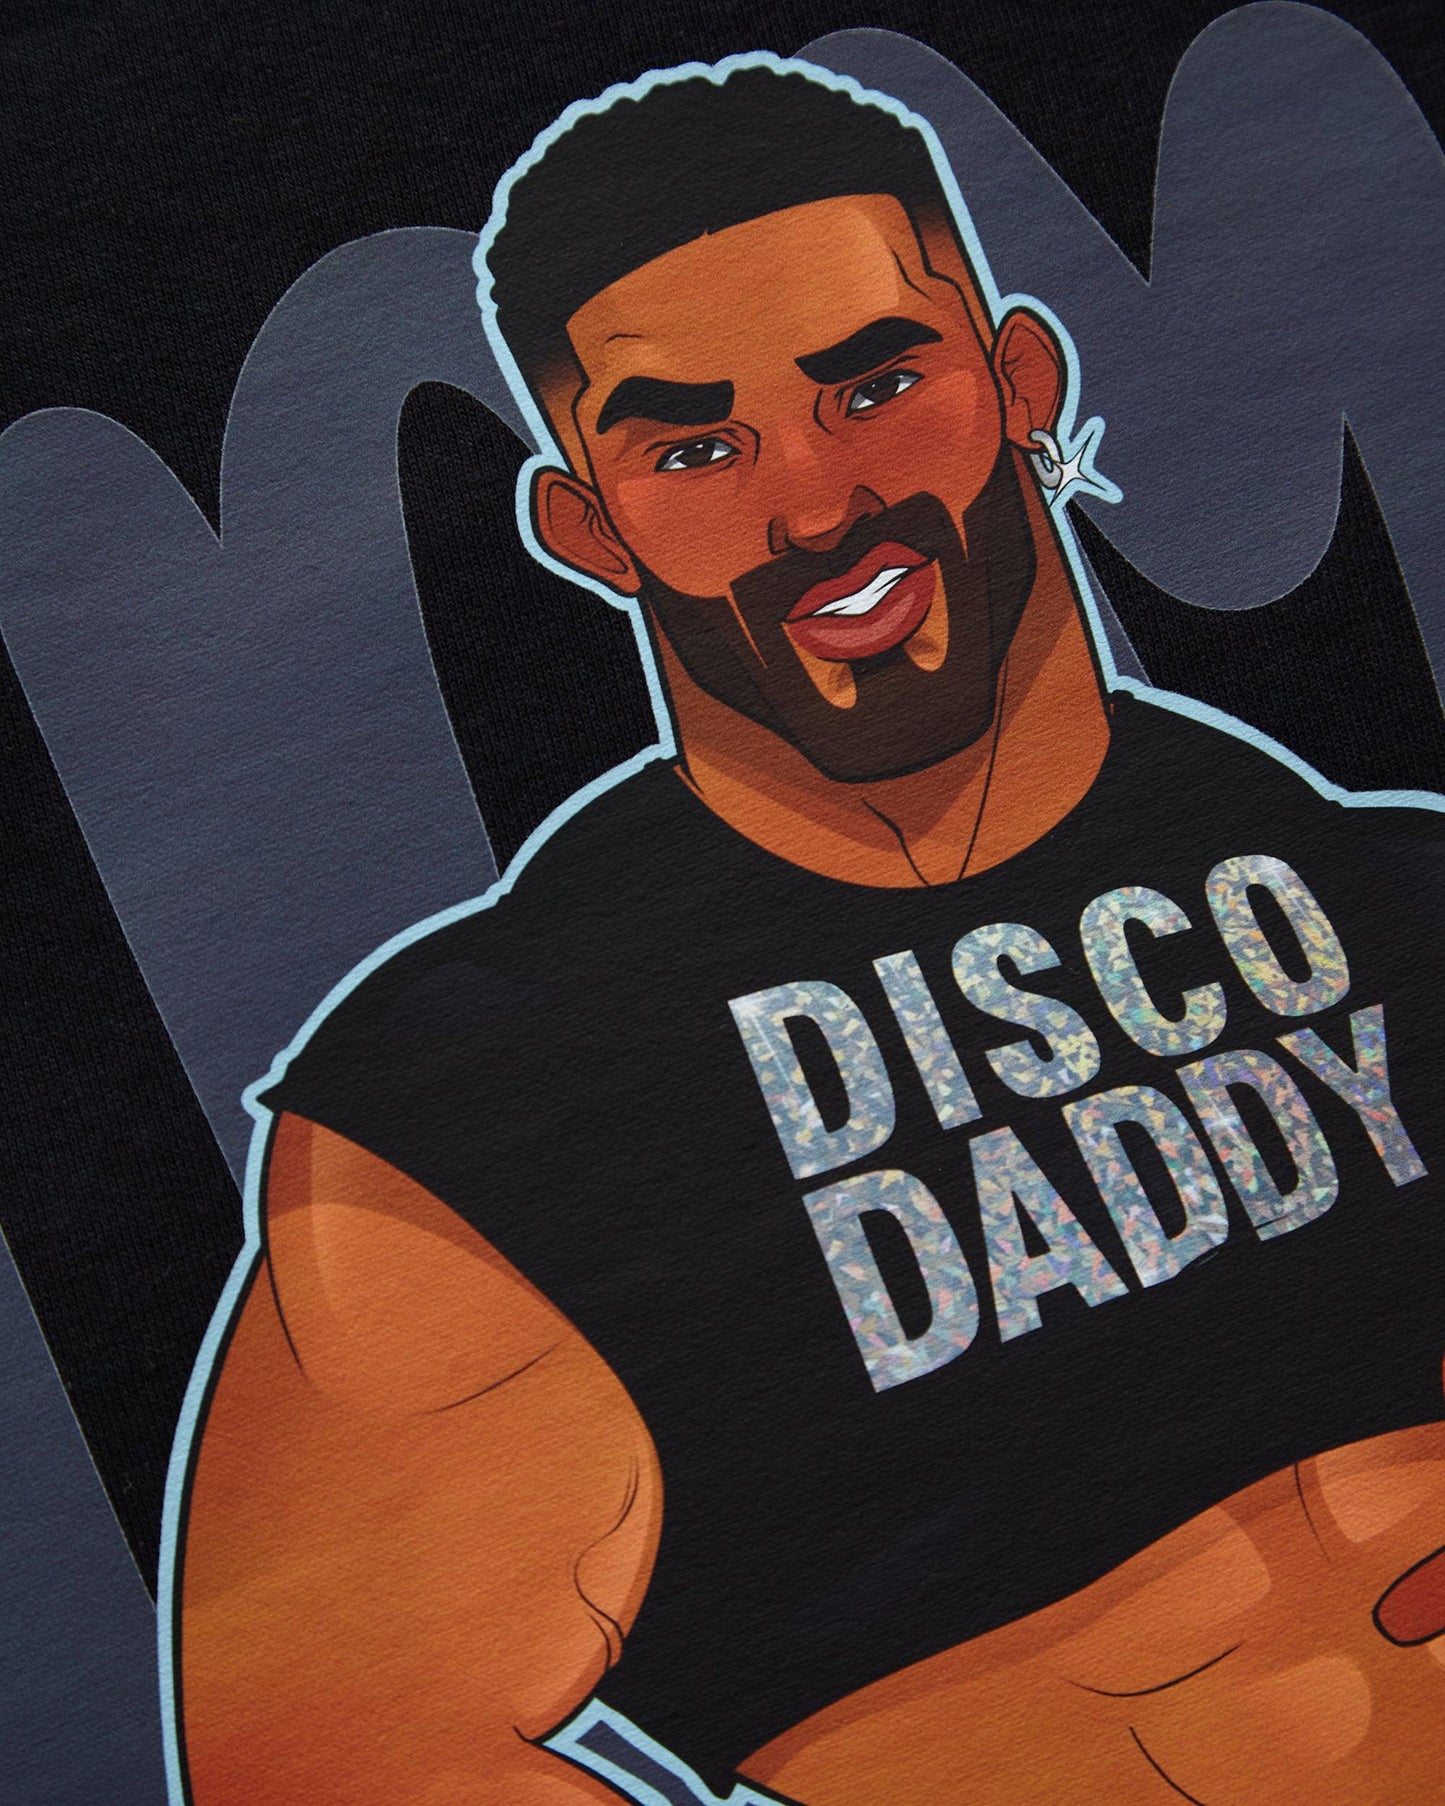 Trent the disco daddy - tshirt crop /crop top - HOMOLONDON